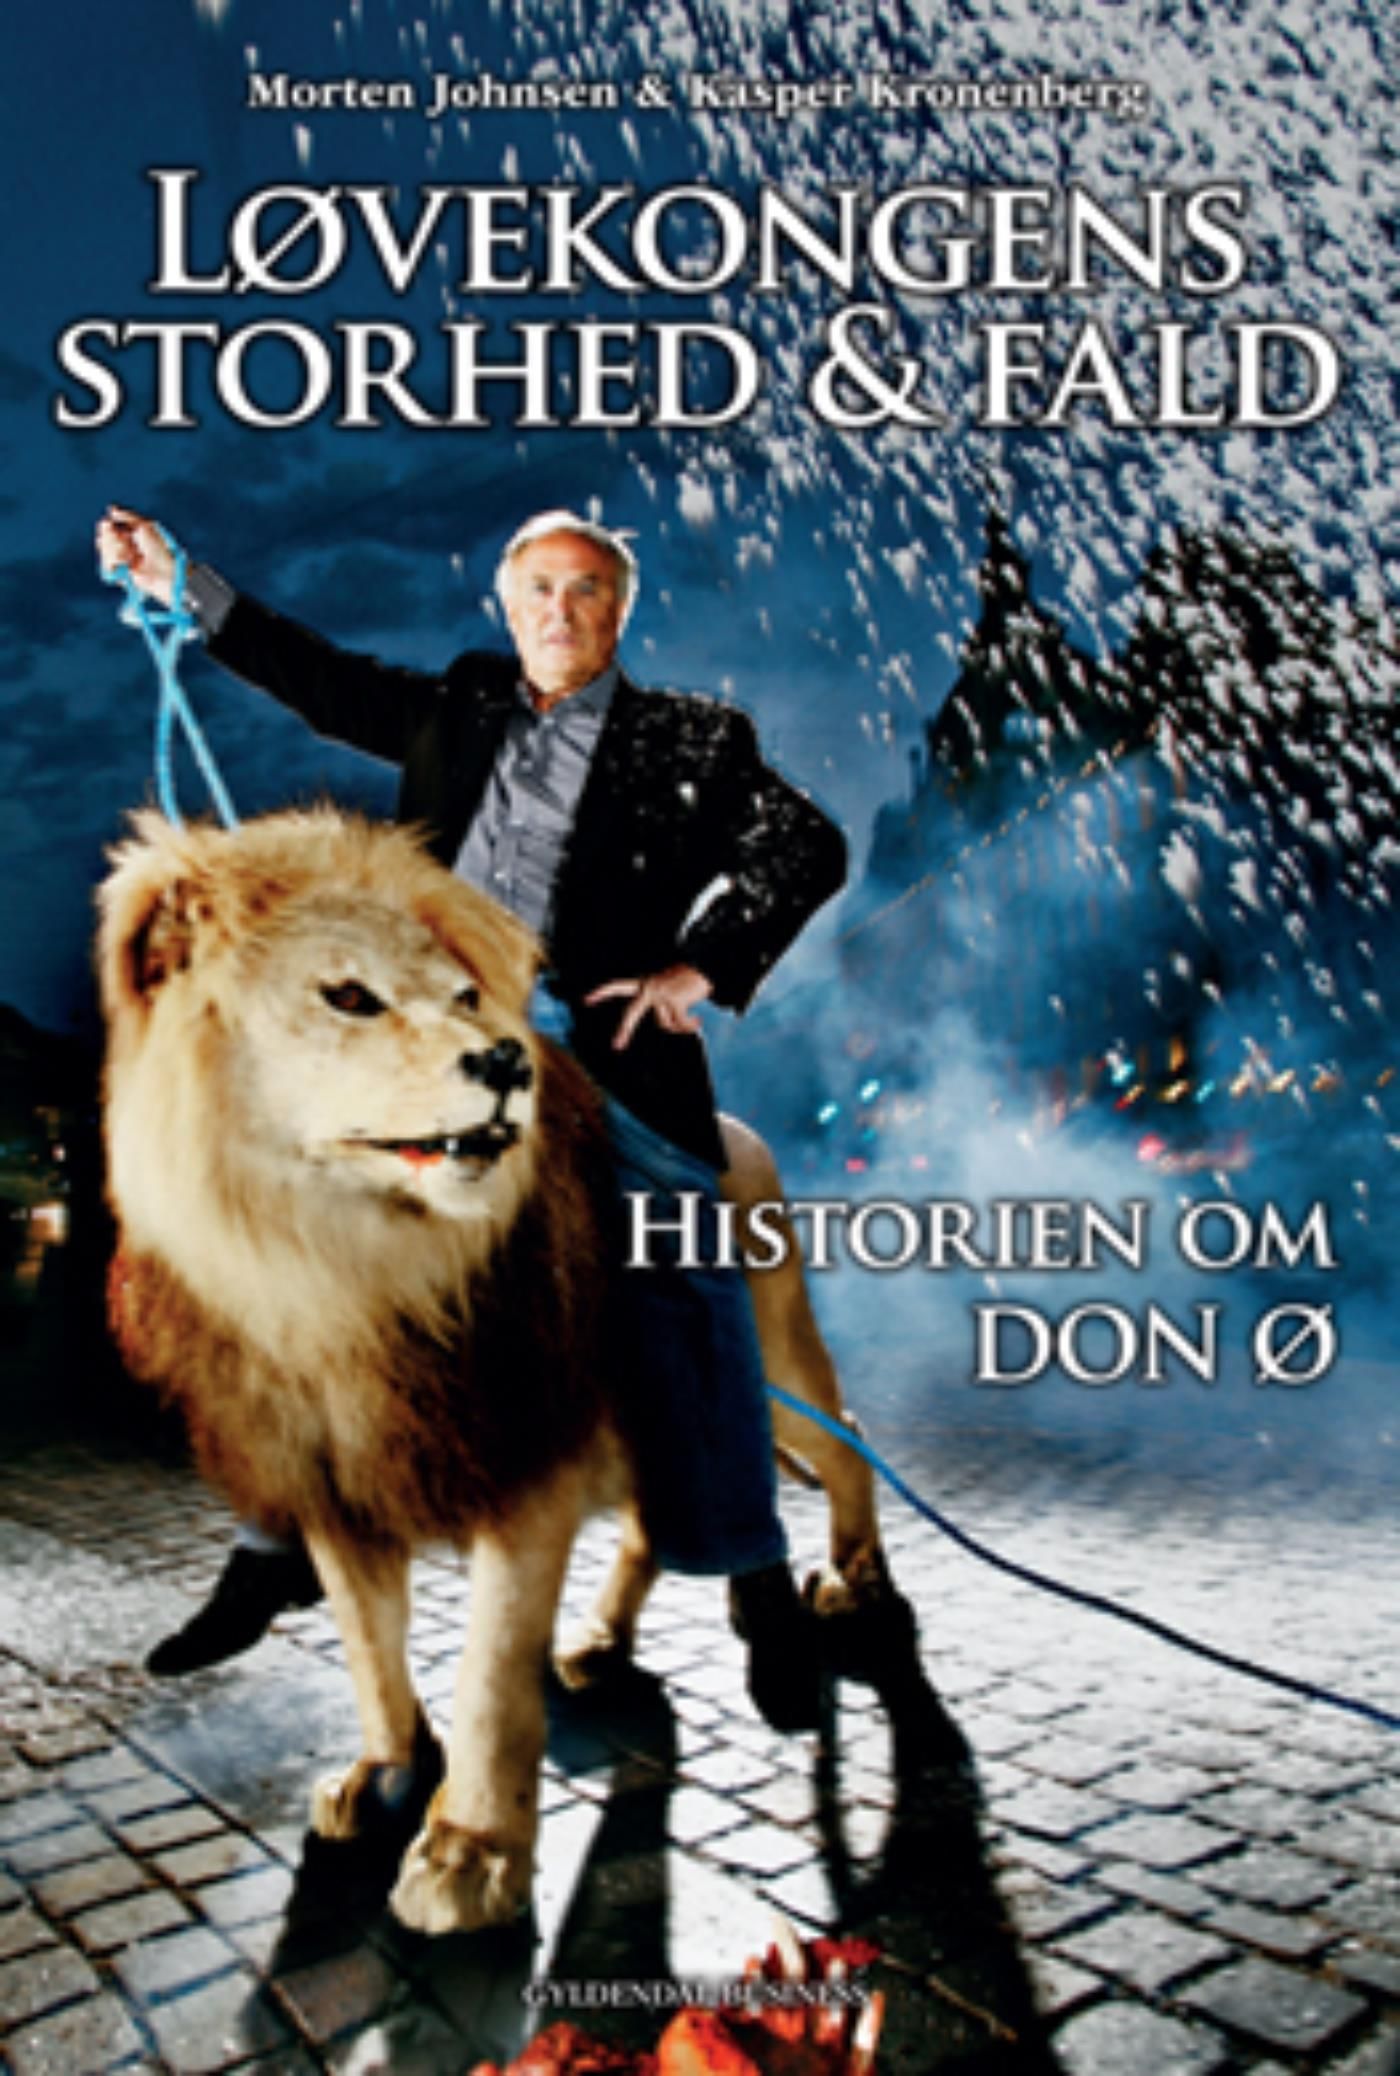 Løvekongens storhed og fald, eBook by Morten Johnsen, Kasper Kronenberg